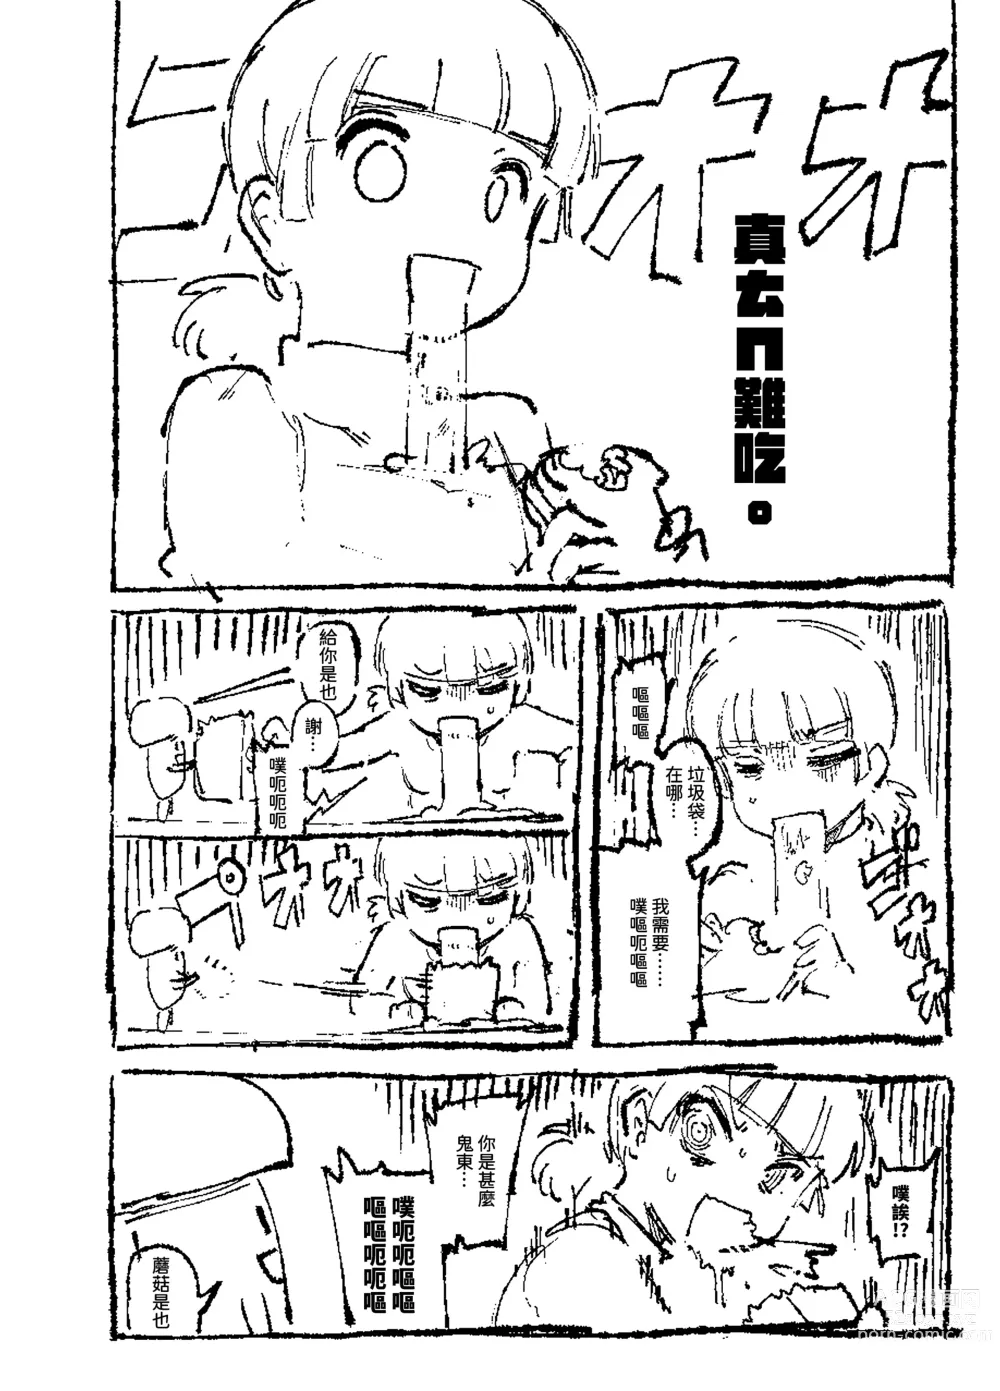 Page 5 of doujinshi 家裡過於潮濕長出致幻蘑菇意外誤食後發情的那些事